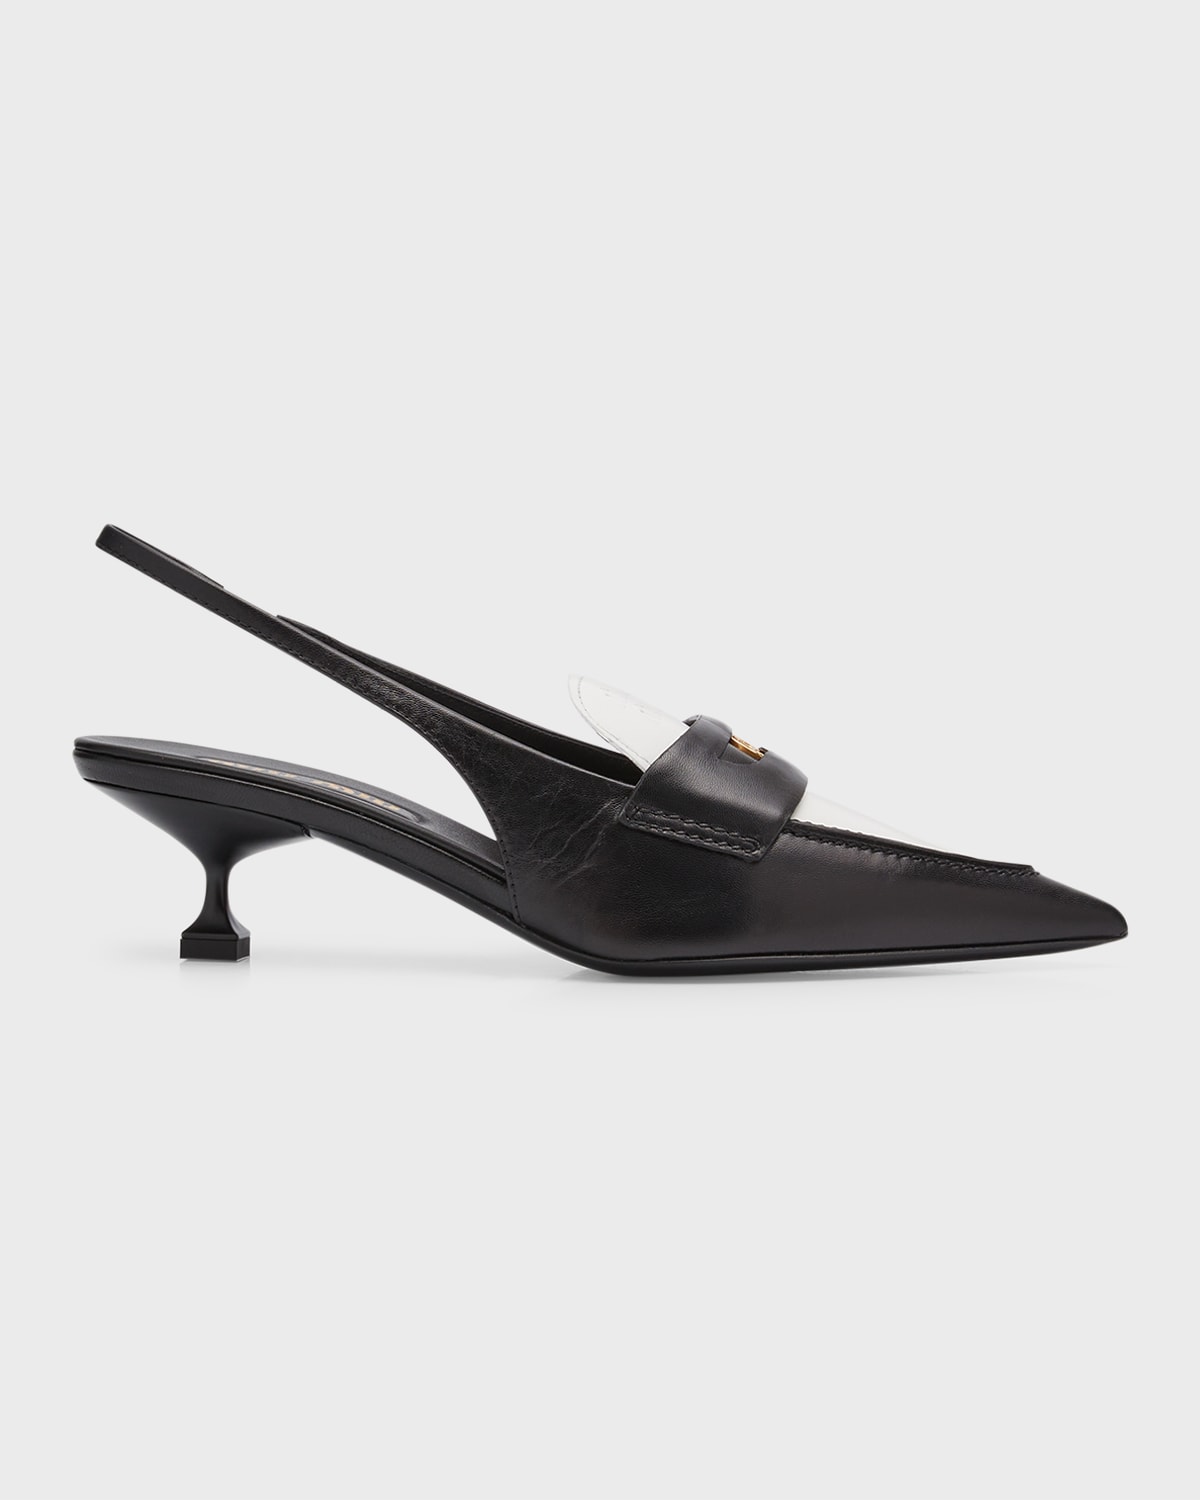 Miu Miu Patent Leather Heeled Penny Loafers | Neiman Marcus